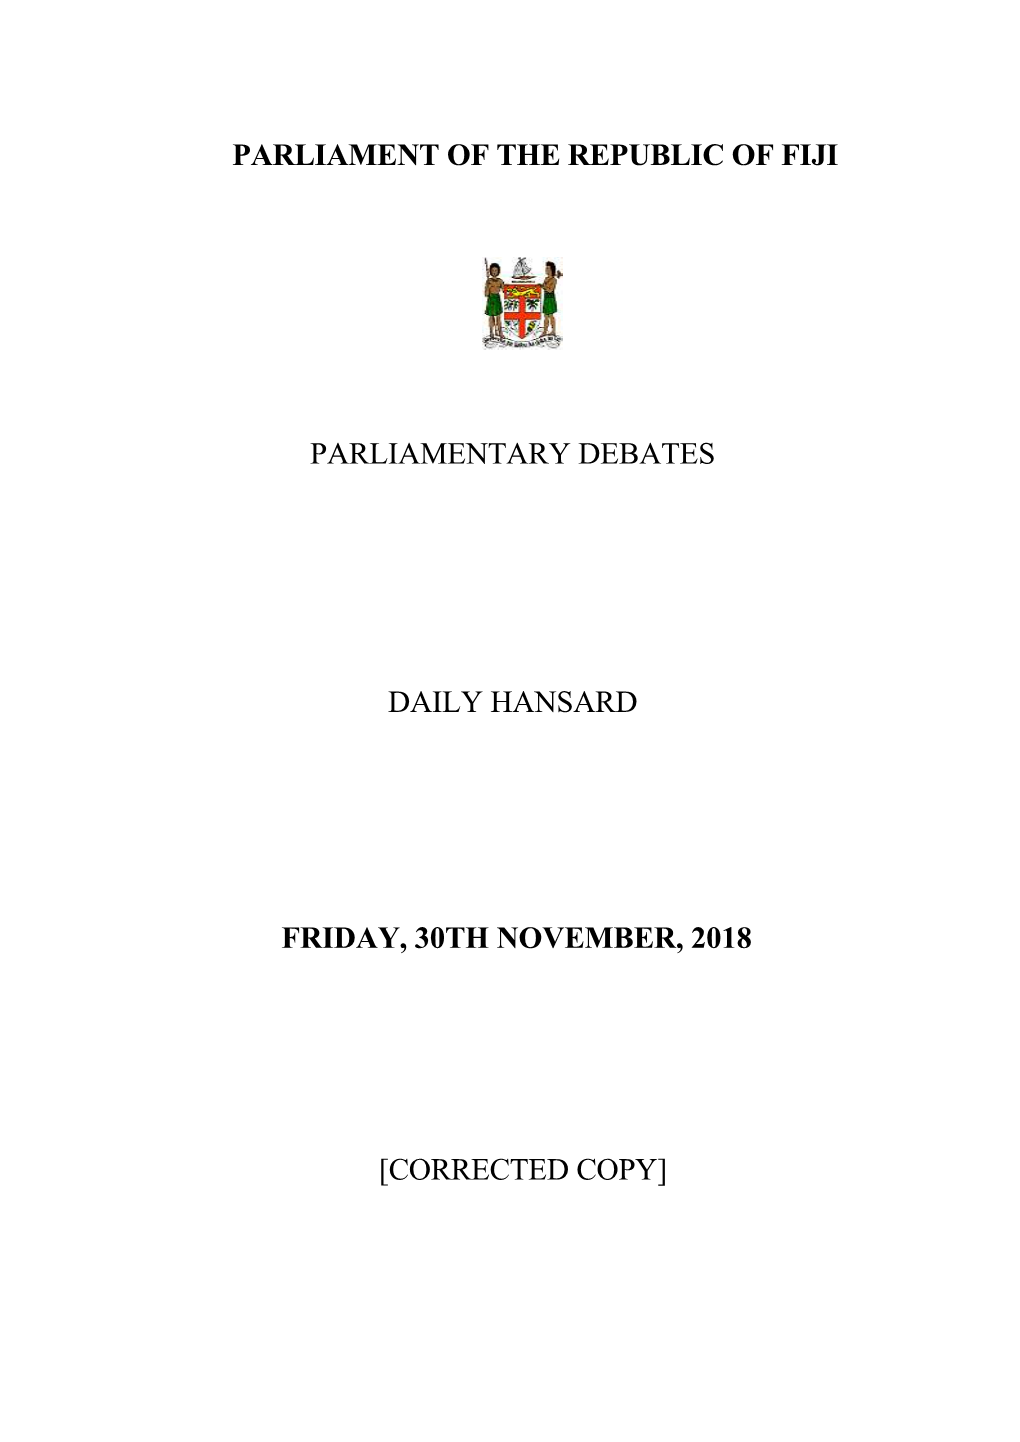 Parliament of the Republic of Fiji Parliamentary Debates